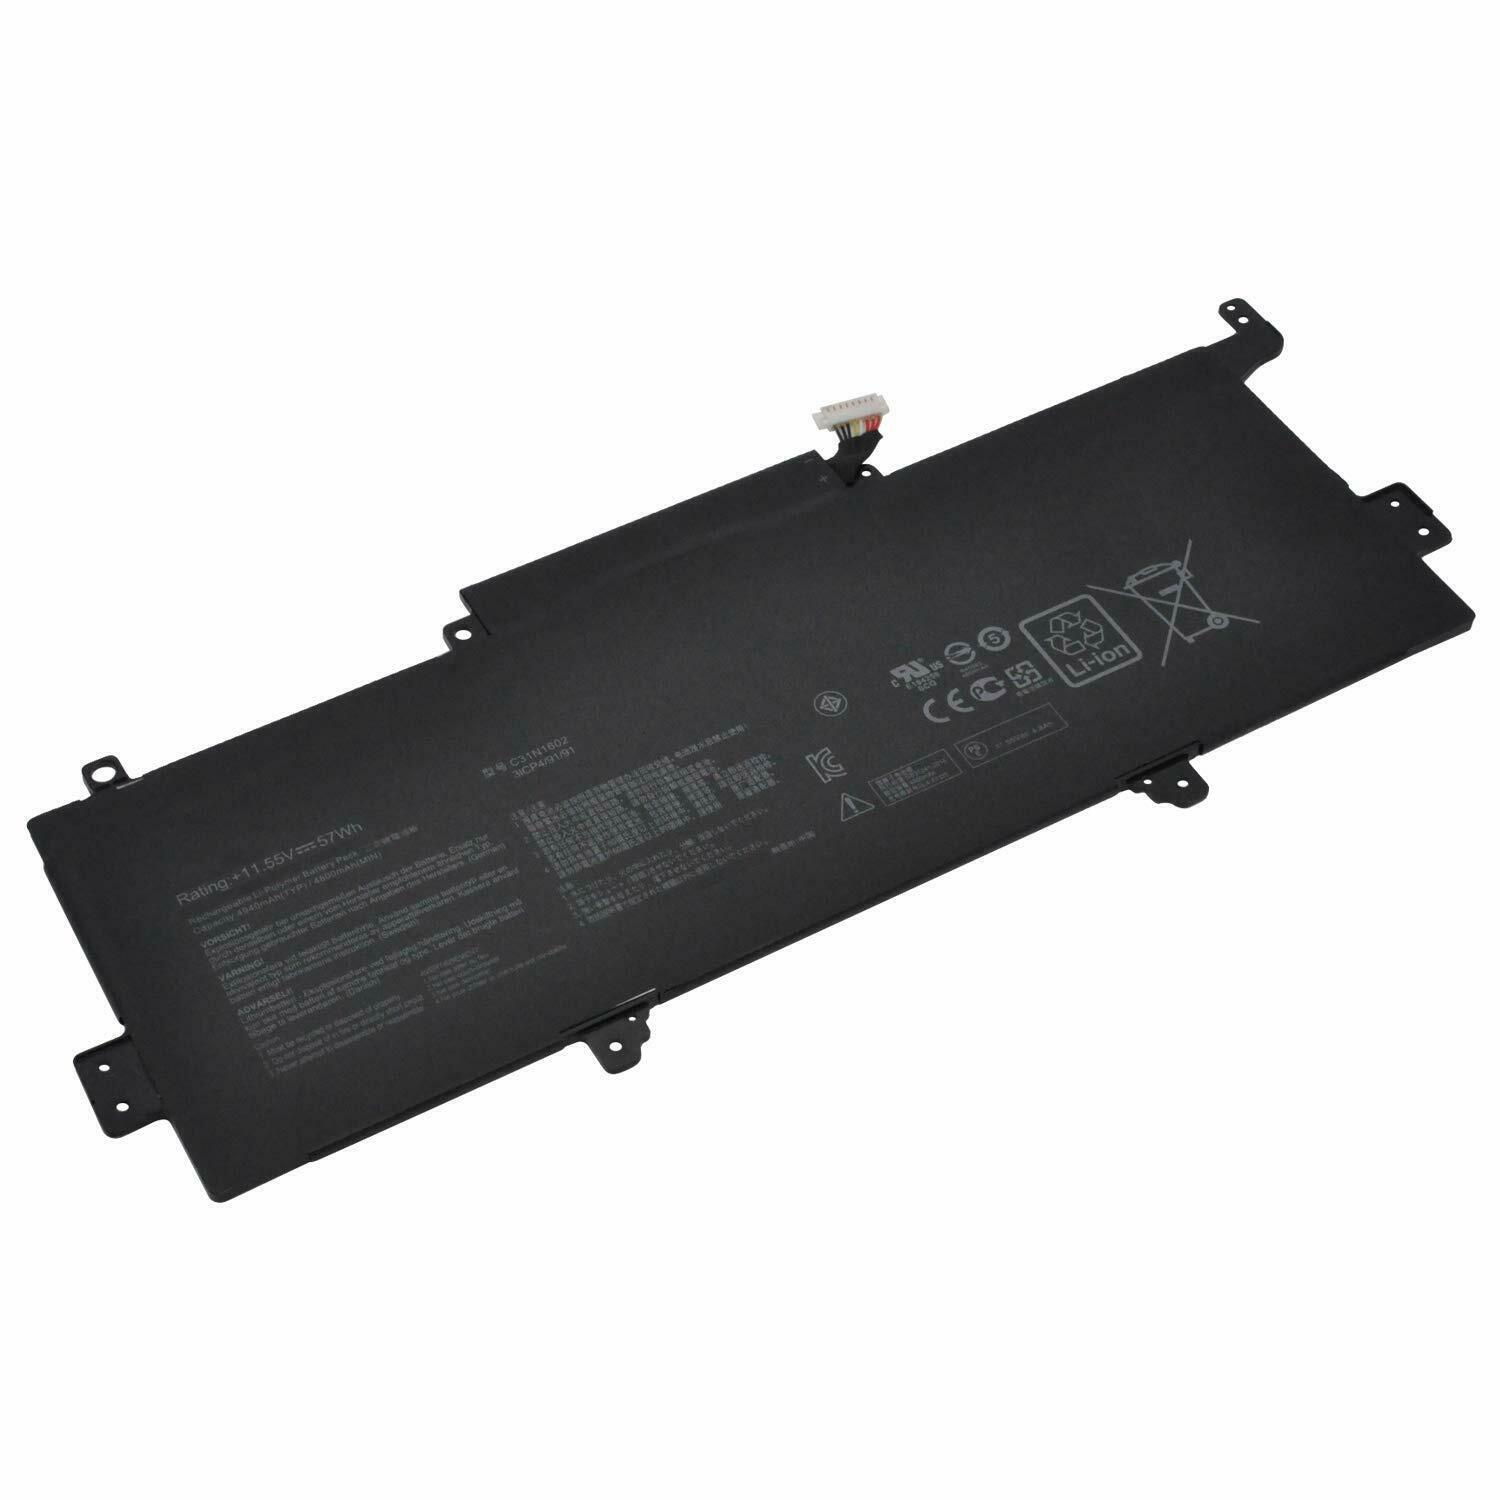 C31N1602 ASUS Zenbook U3000U UX330U UX330UA 0B200-02090000 kompatibelt batterier - Trykk på bildet for å lukke